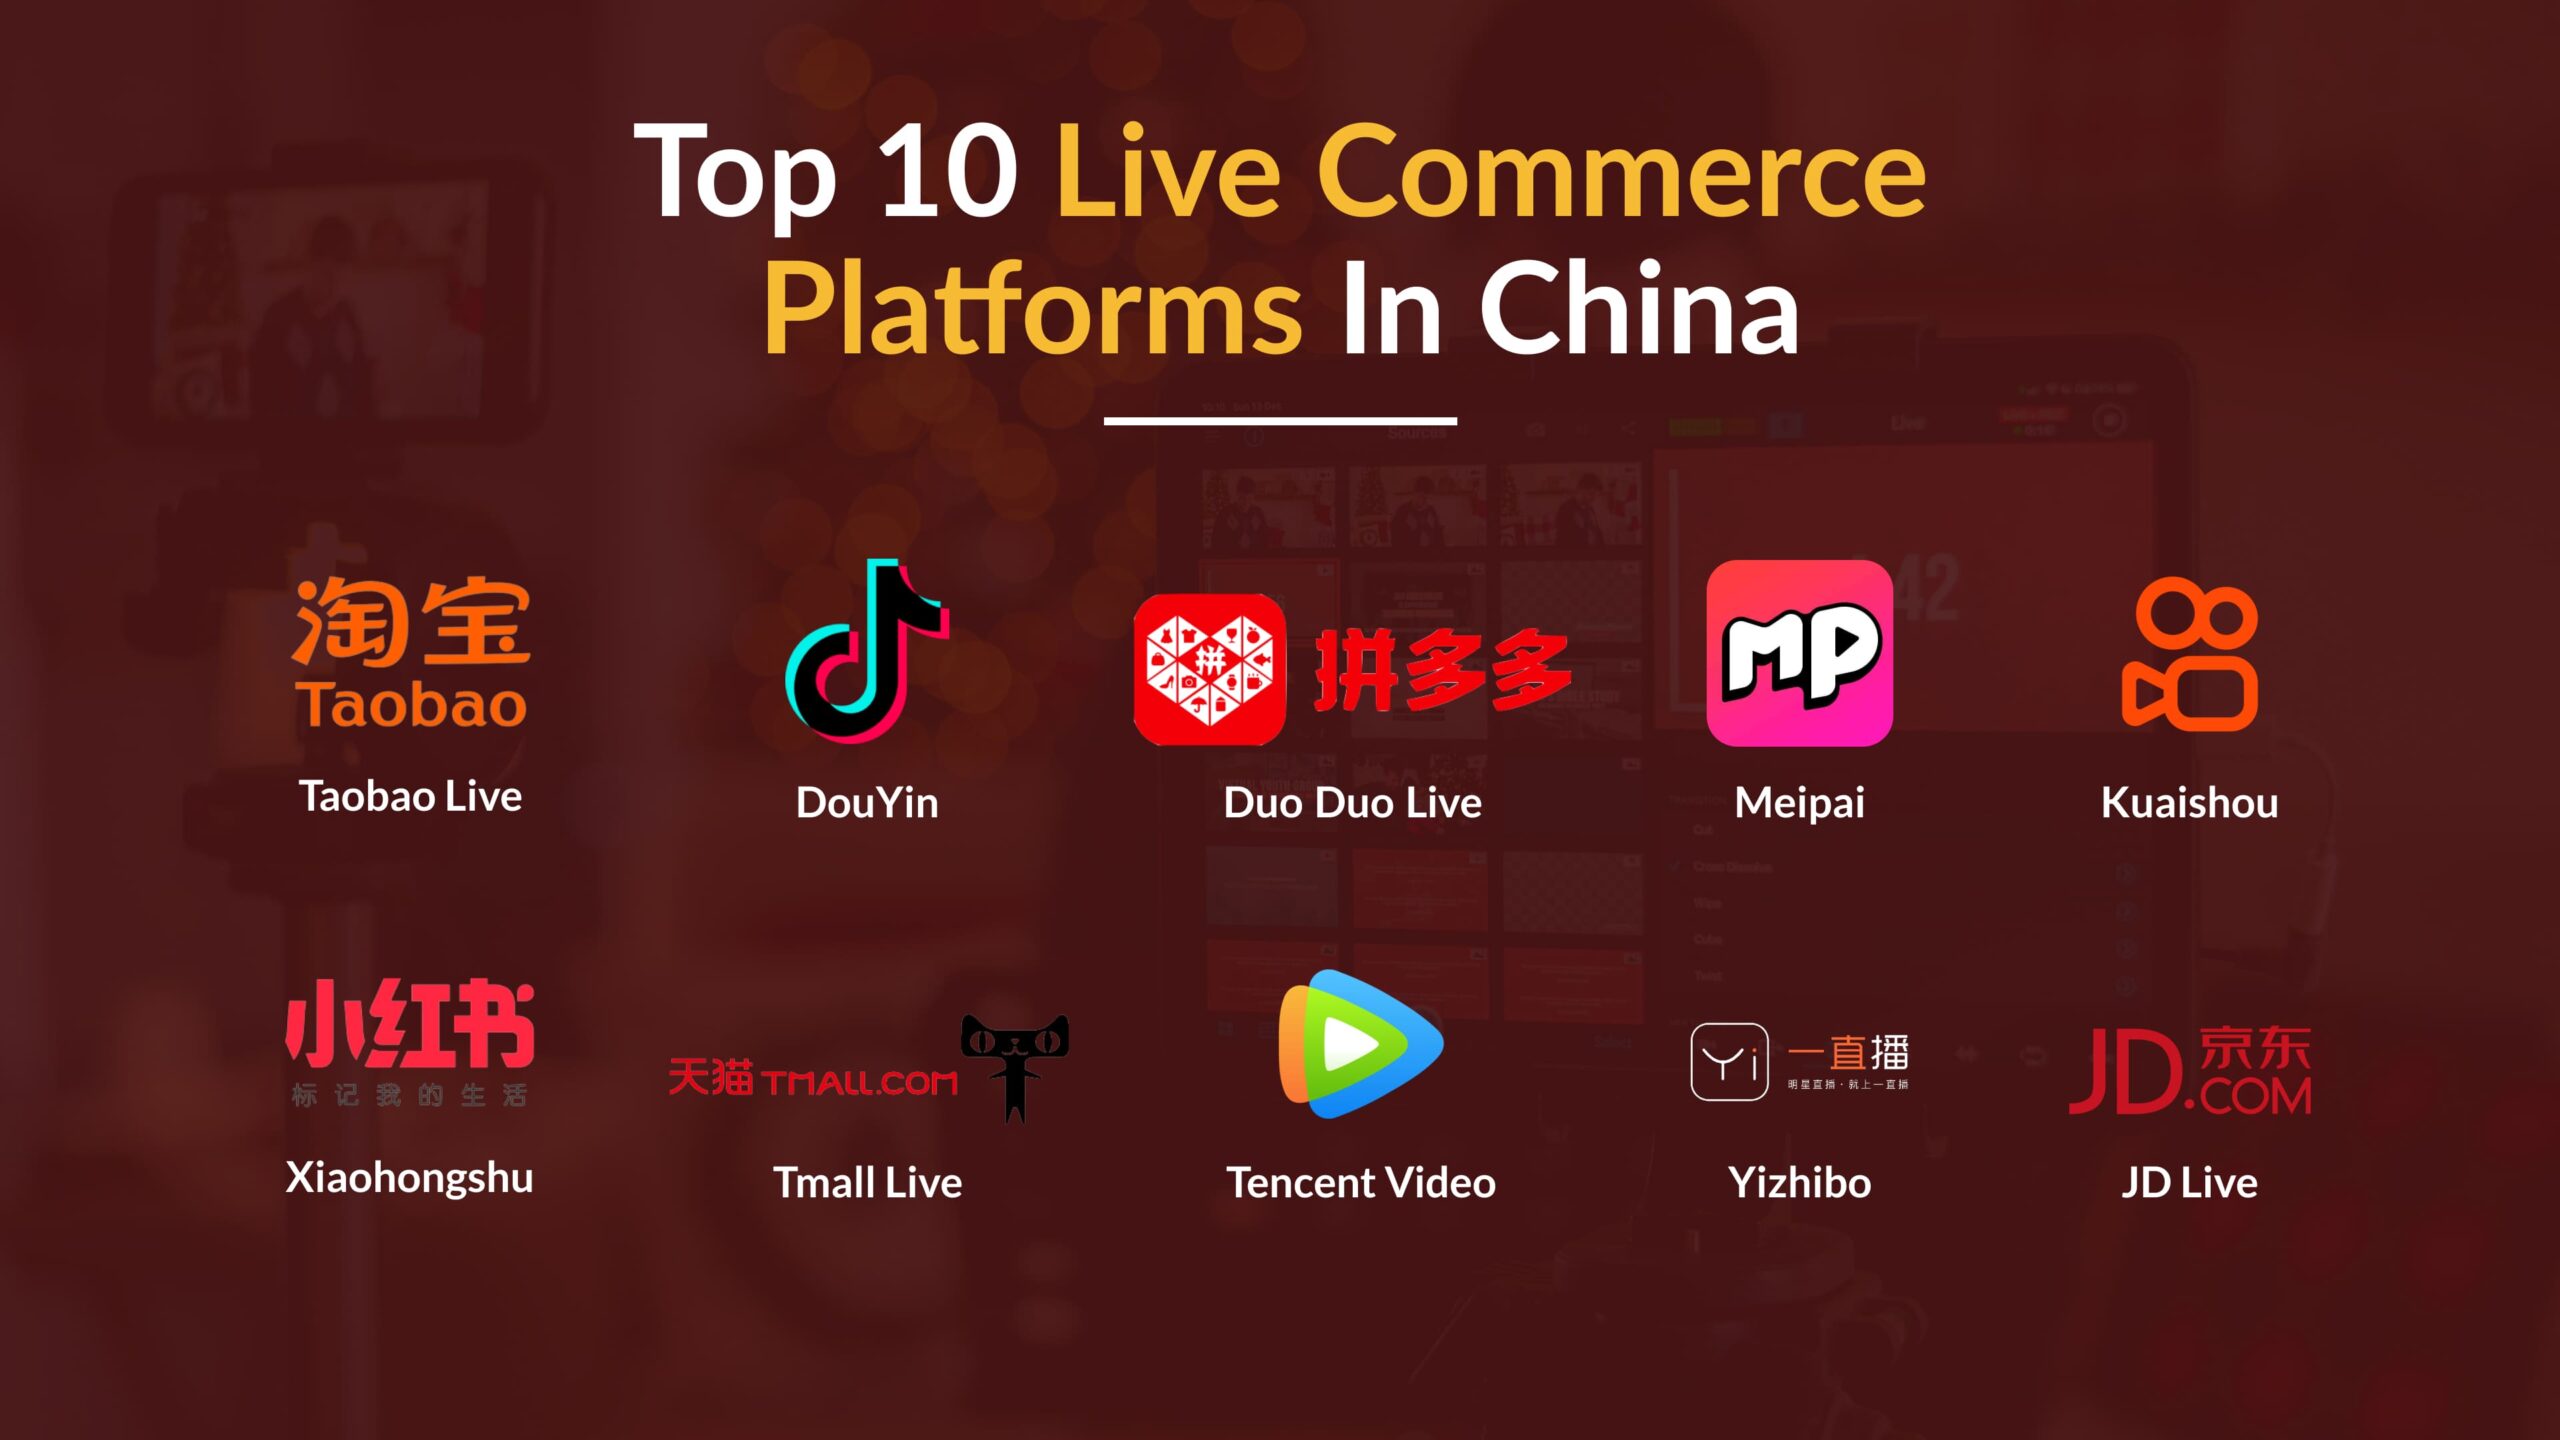 Top 10 Live Commerce platforms in China consist of Taobao Live, Douyin, Duo Duo Live, Meipai, Kuaishou, Xiaohongshu, Tmall Live, Tencent Video, Yizhibo, and JD Live